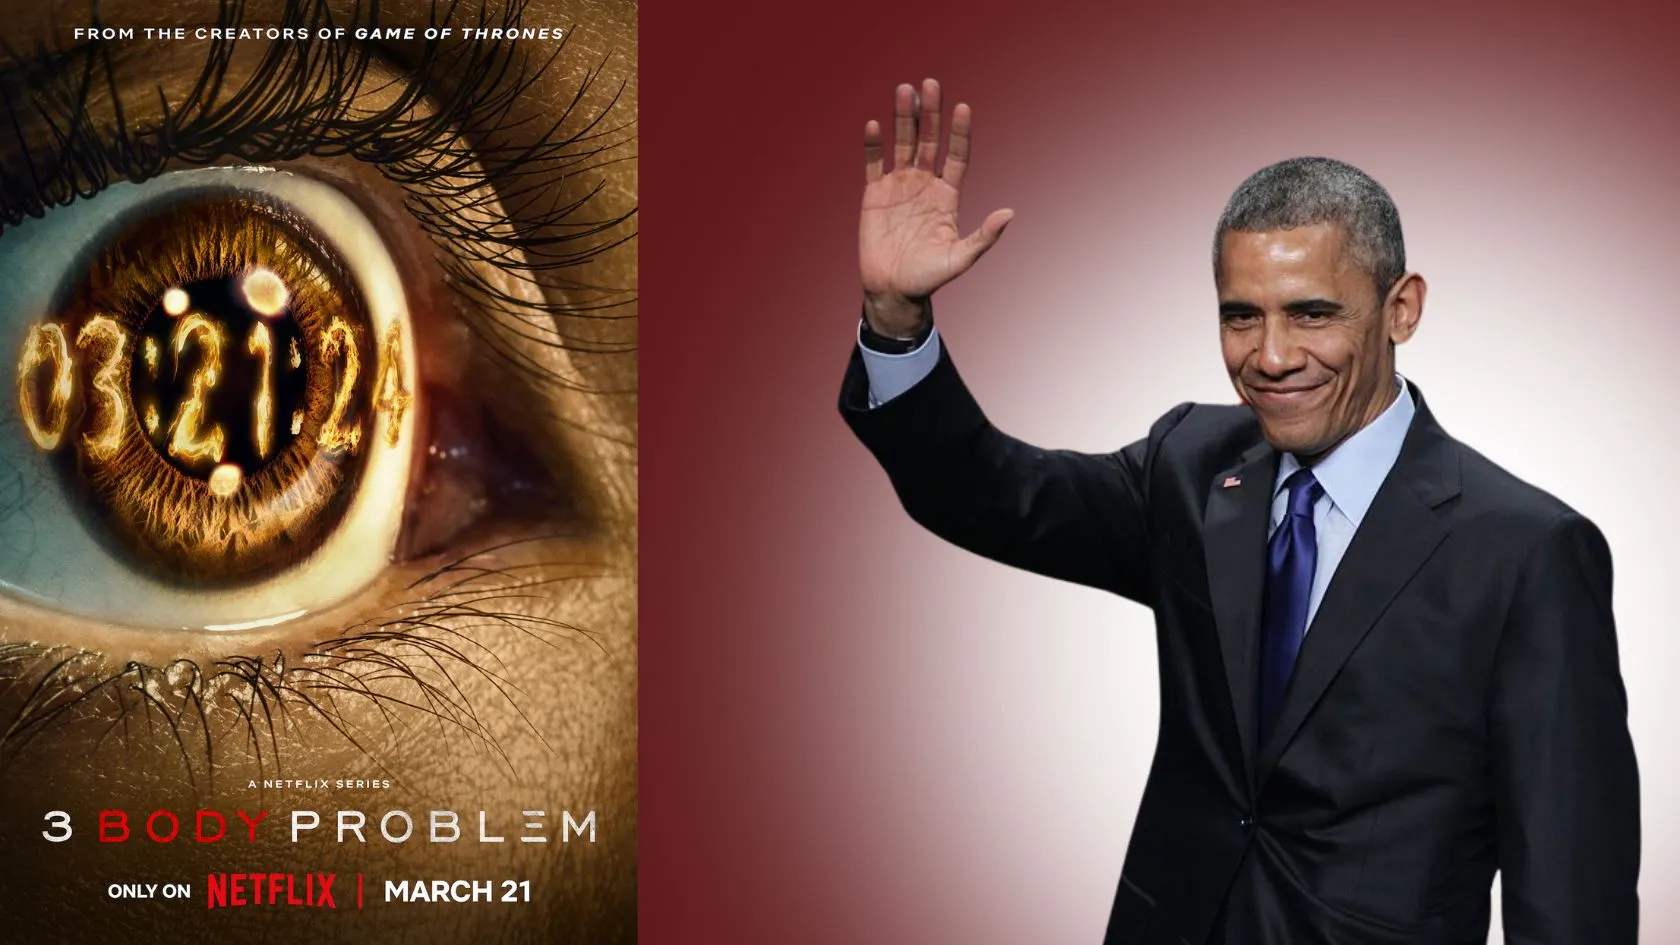 Sci-Fi Gets Presidential Nod Obama Endorses Upcoming Netflix Series '3 Body Problem'